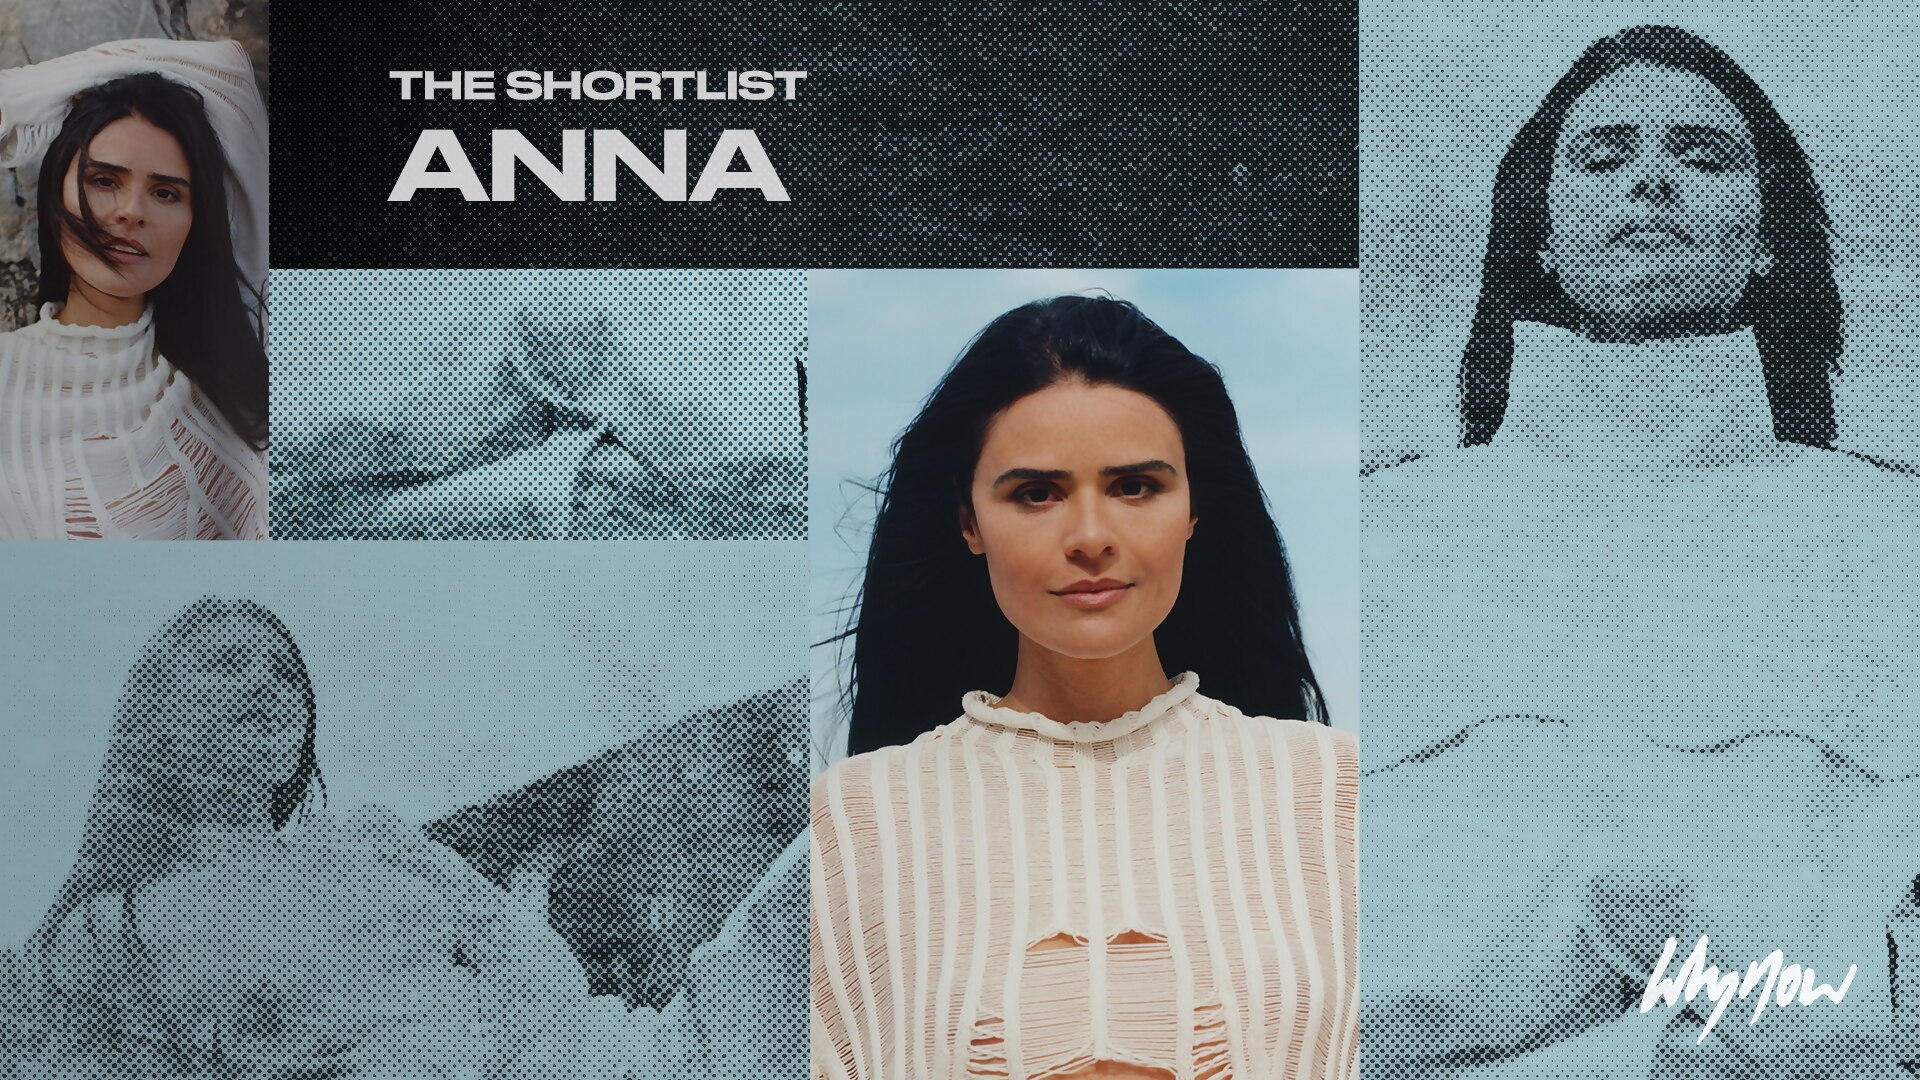 ANNA The Shortlist